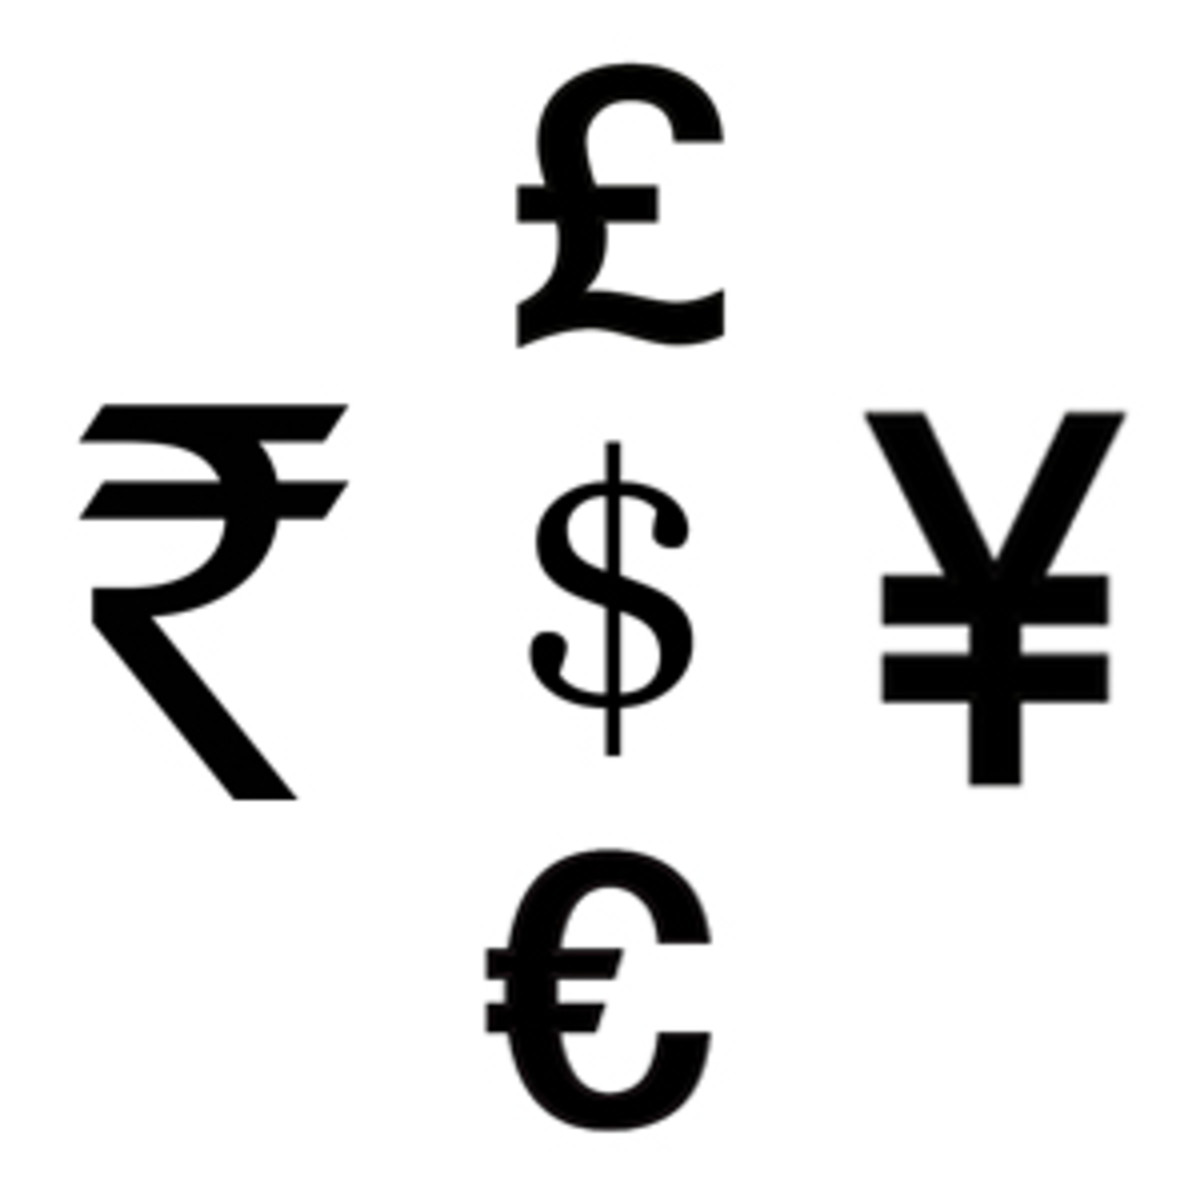 Functions of Money